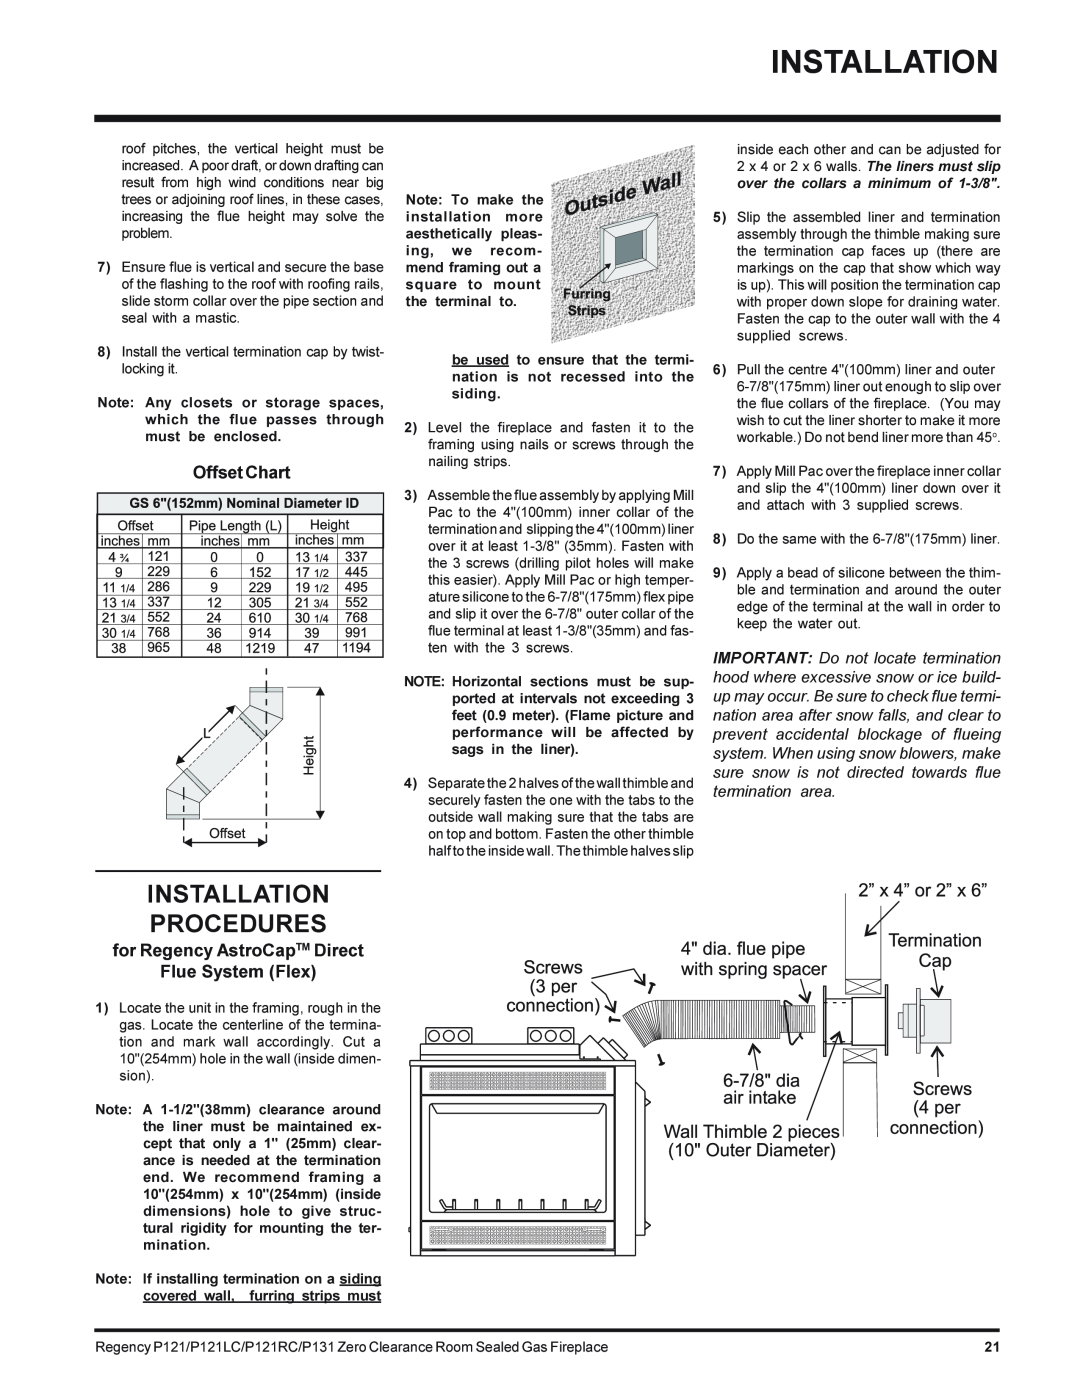 Regency P121LC-NG, P131-NG, P121RC-NG Installation Procedures, Offset Chart, for Regency AstroCapTM Direct Flue System Flex 